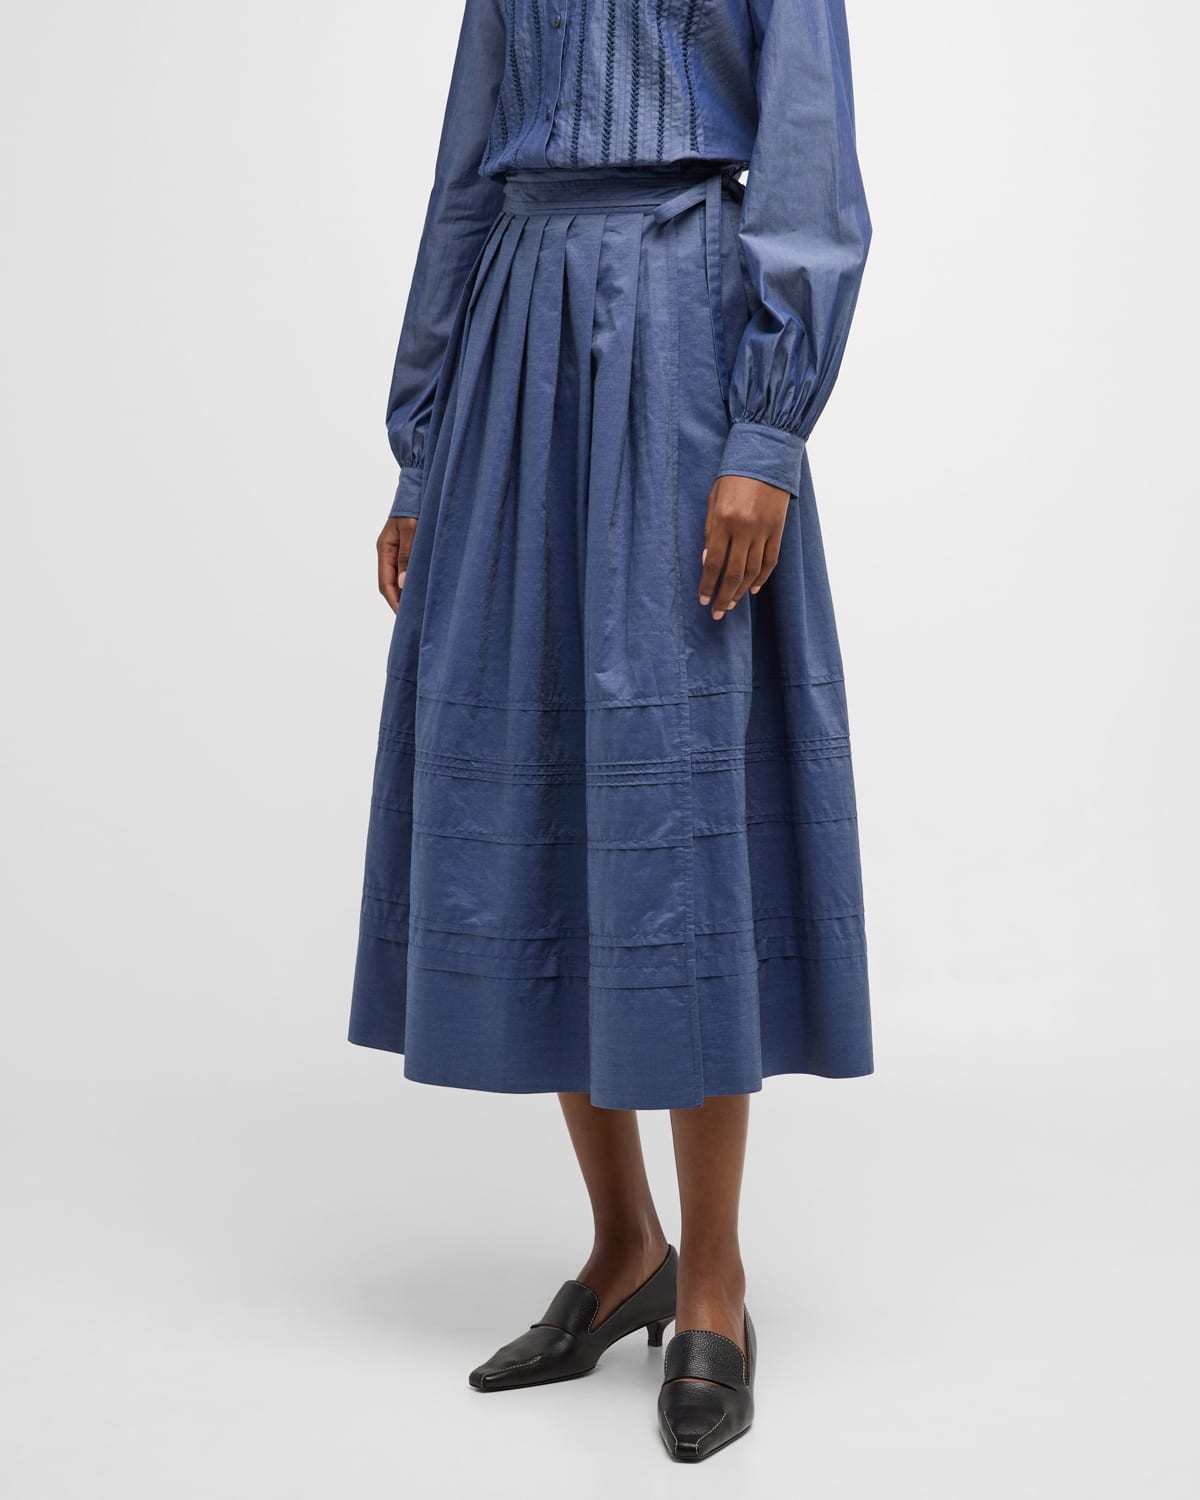 Aparejo Pleated A-Line Cotton Midi Skirt